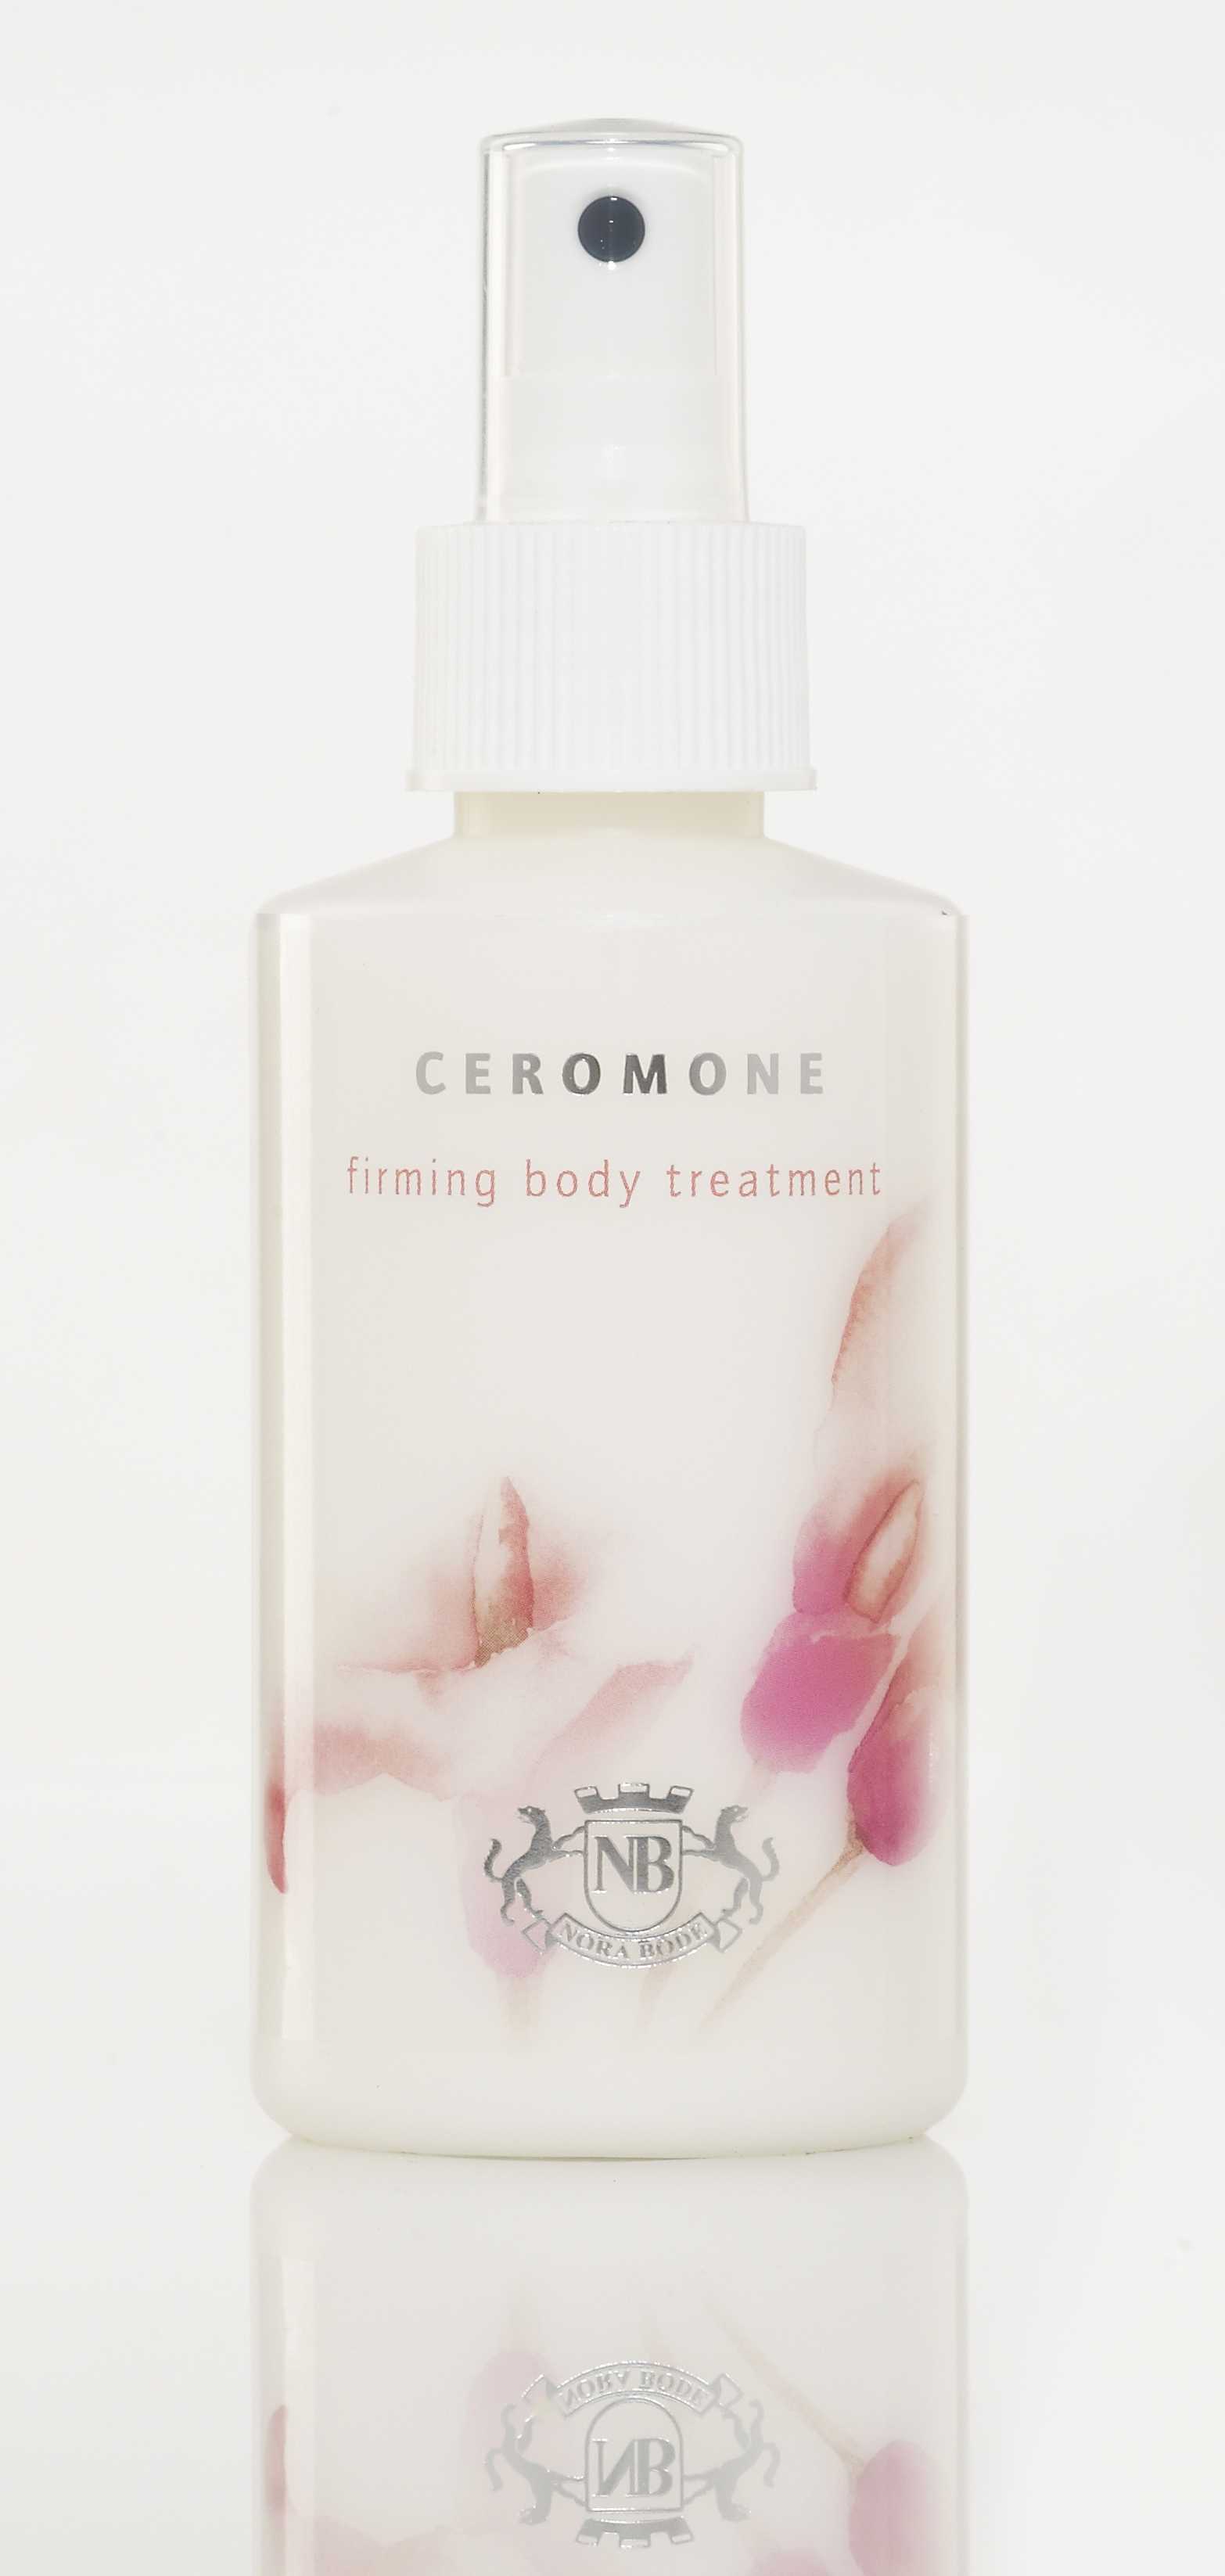 Ceromone Body treatment web